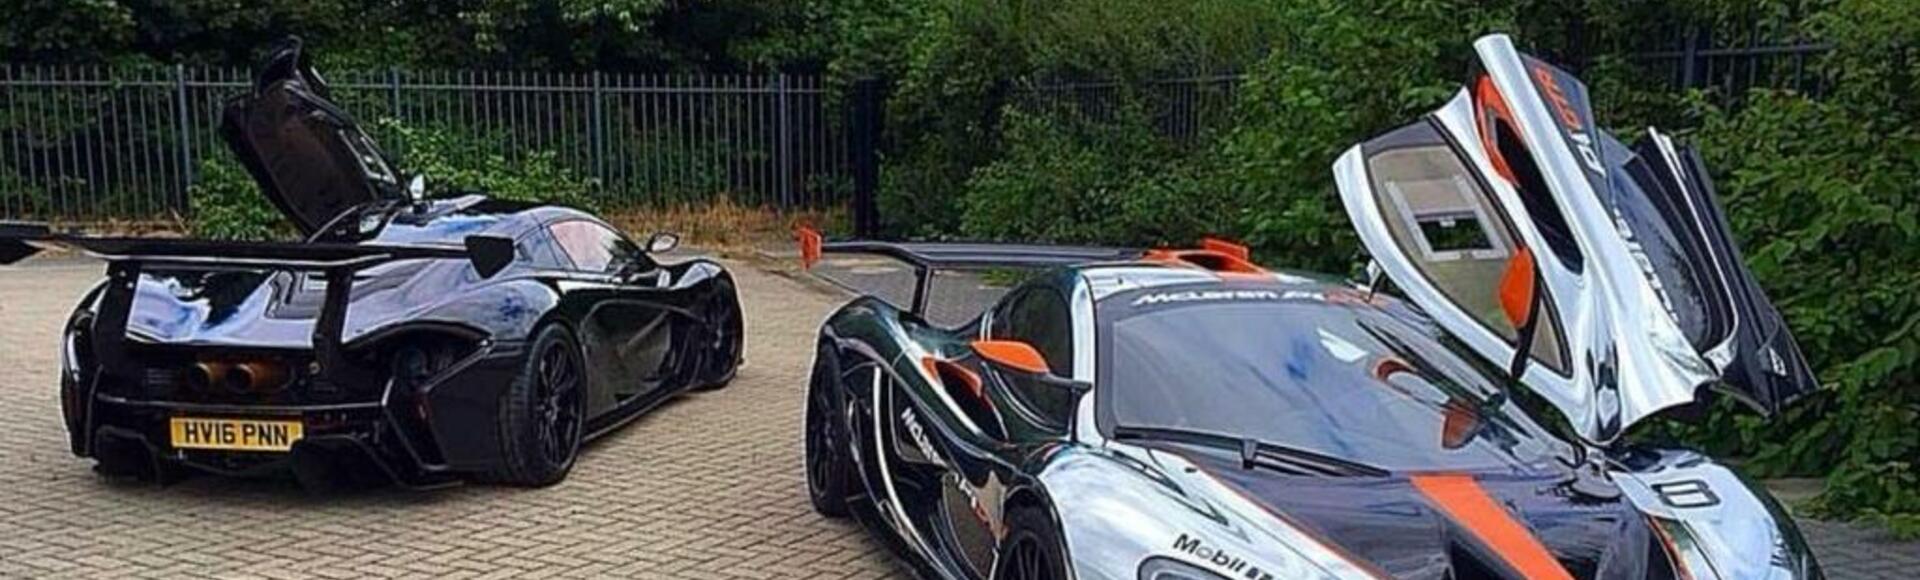 Dutch McLaren Collection